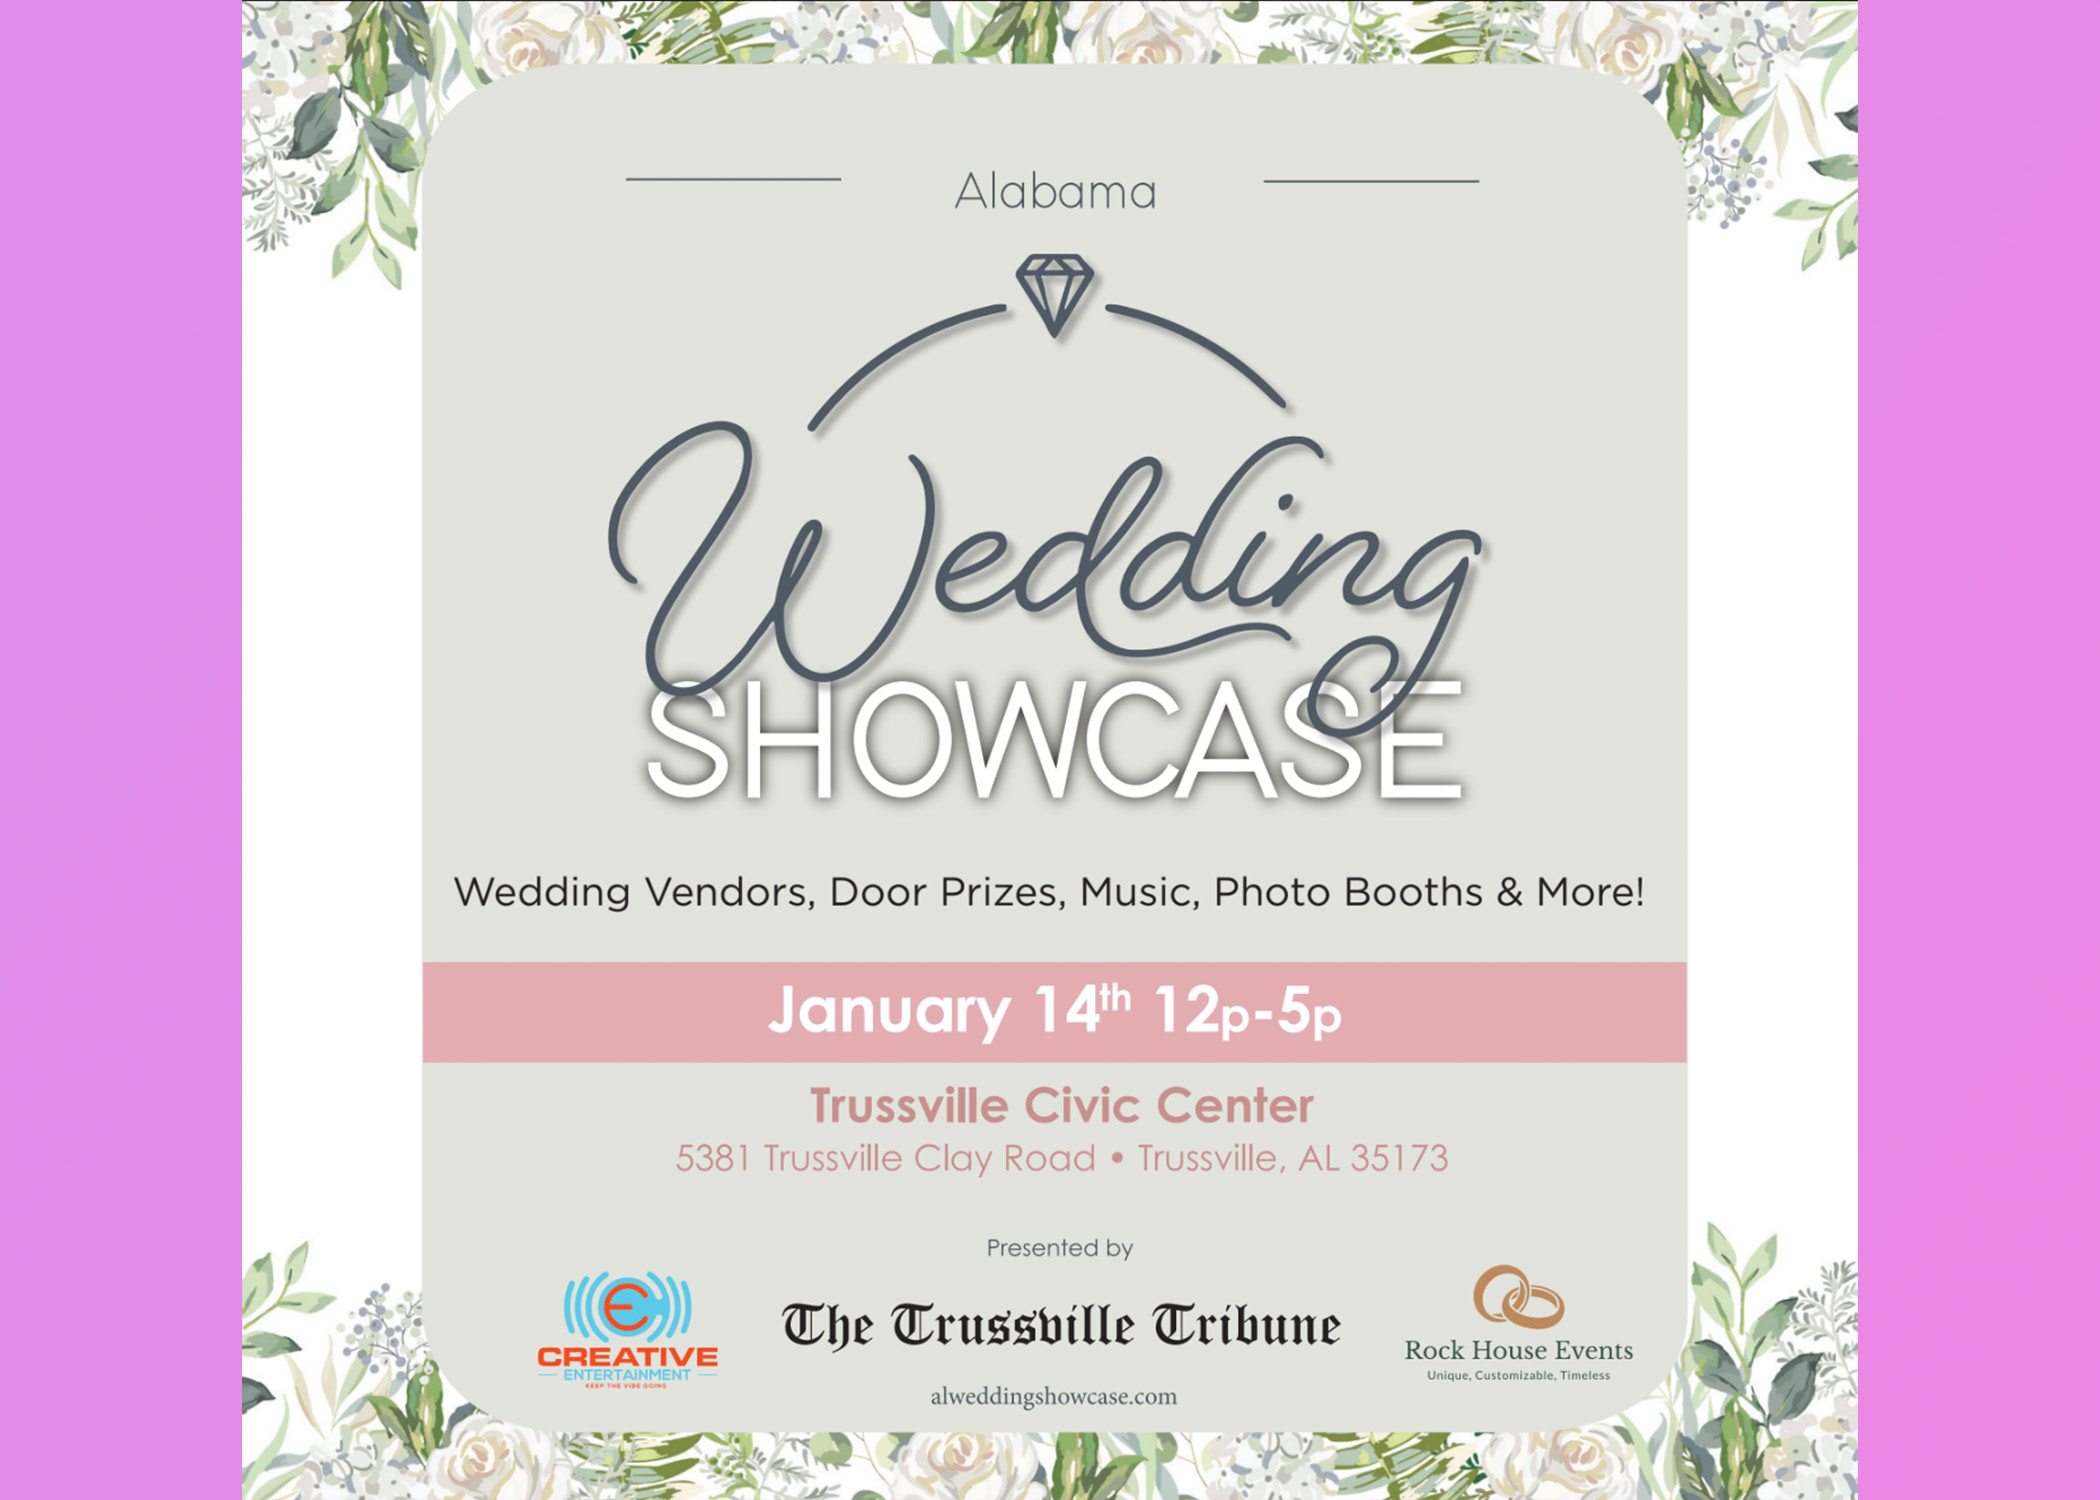 Alabama Wedding Showcase this Sunday at Trussville Civic Center | The ...